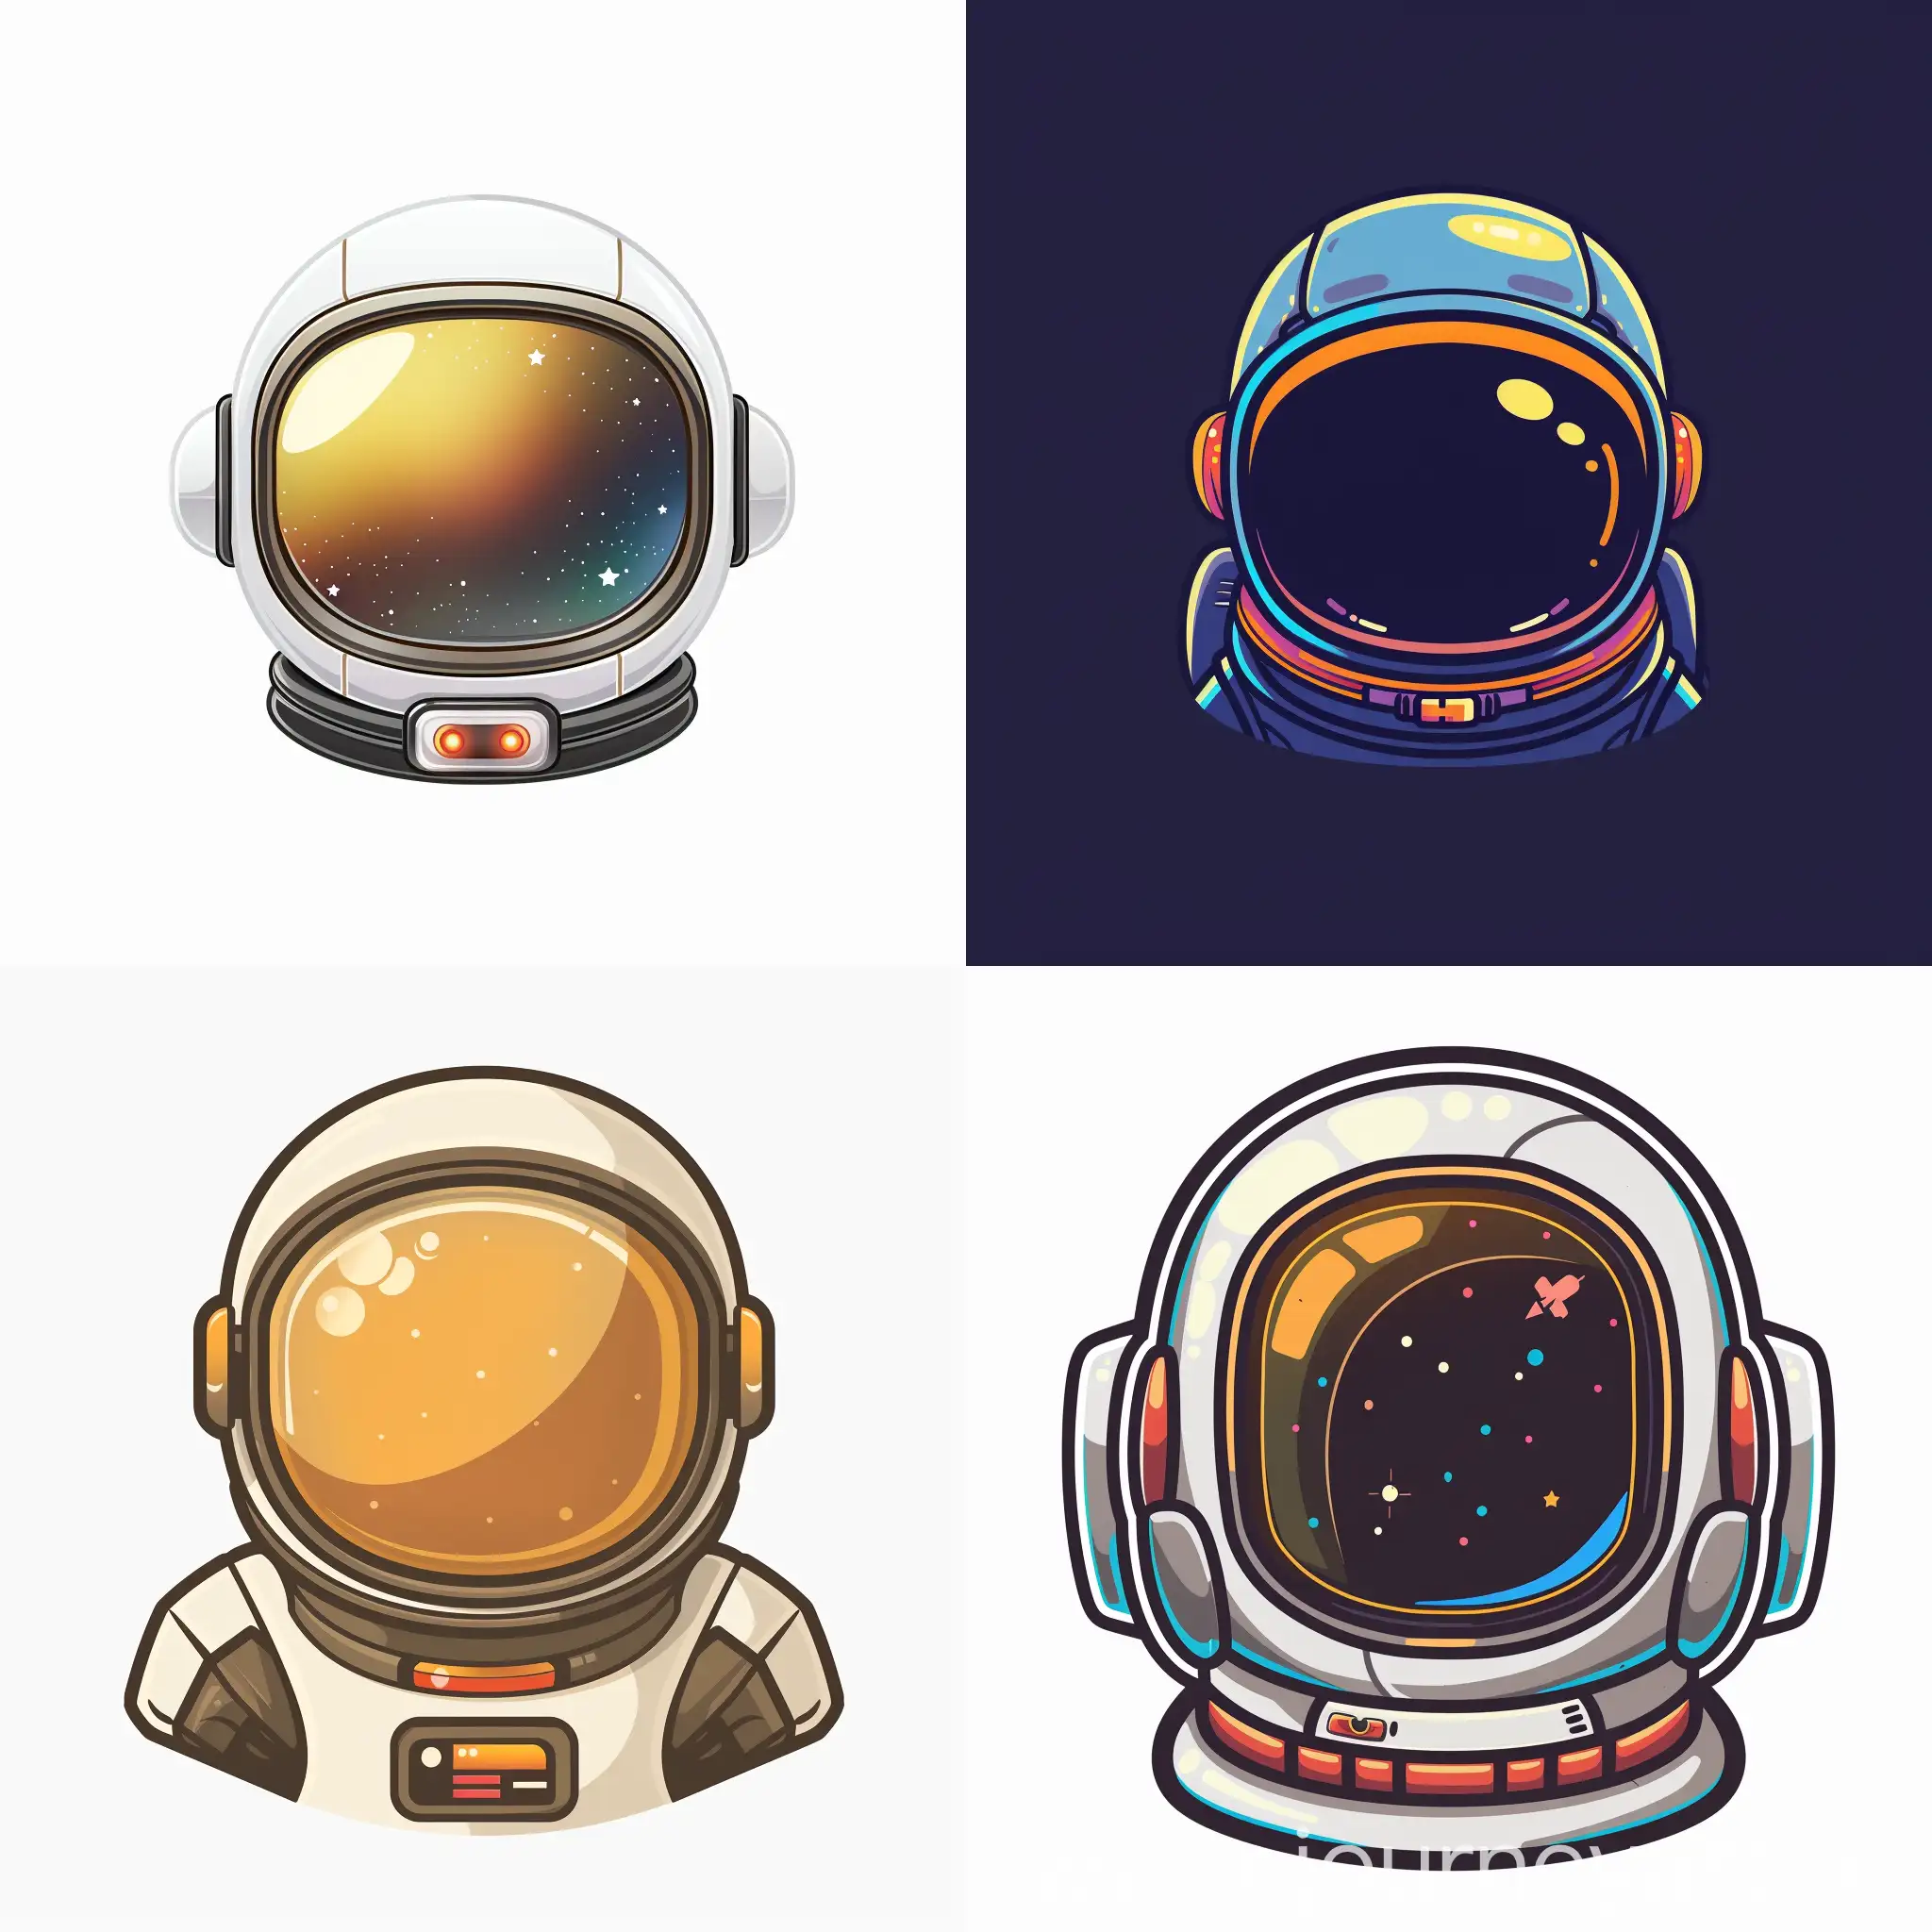 Astronaut-Emoji-Graphic-Style-Illustration-on-Solid-Background